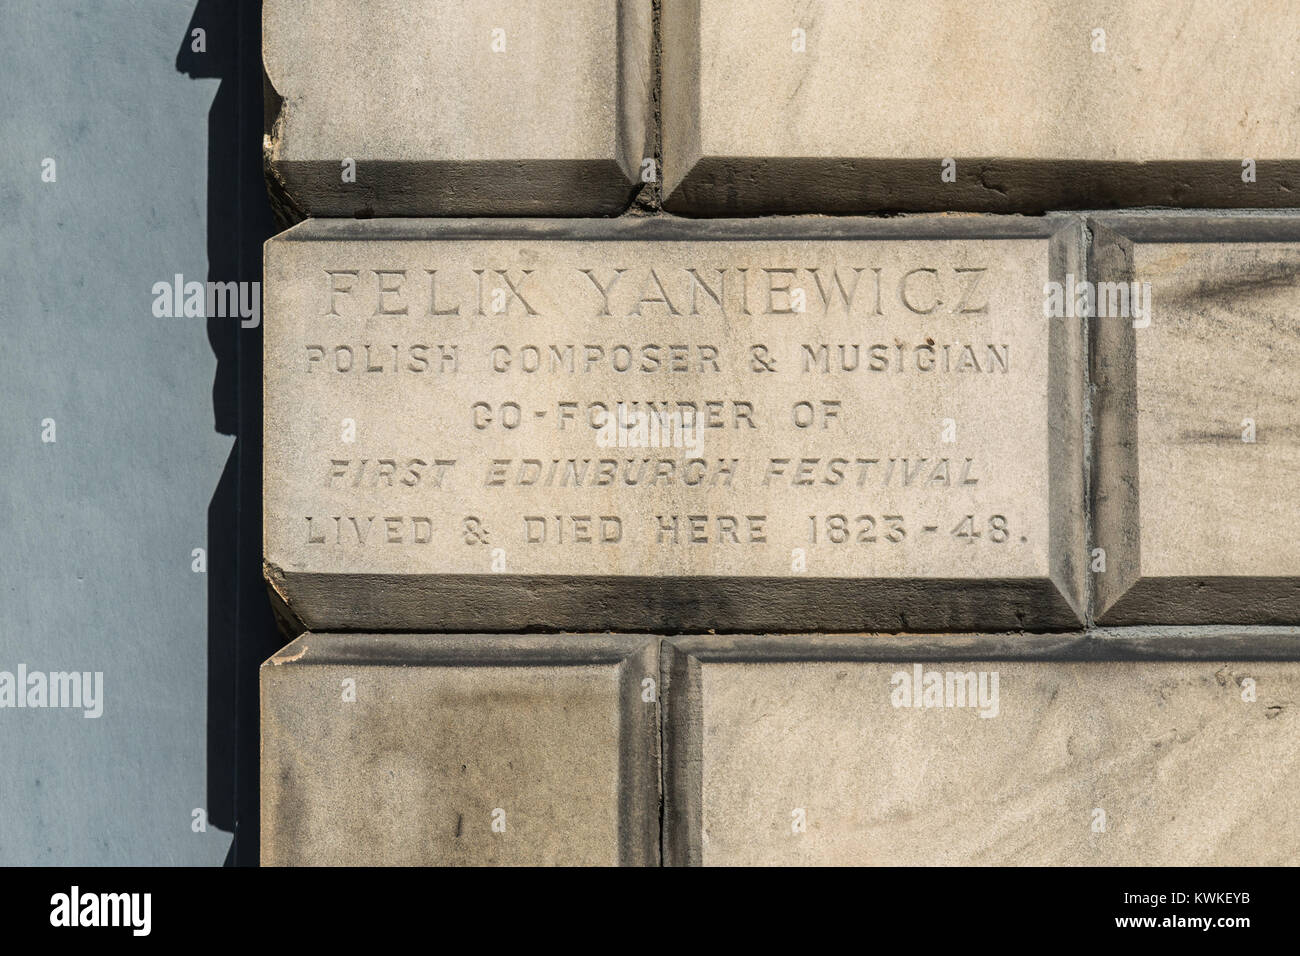 Felix Yaniewicz Gedenkstätte Inschrift bei 84 Great King Street in Edinburgh, wo Felix Yaniewicz polnischen Komponisten und Musiker lebte Stockfoto